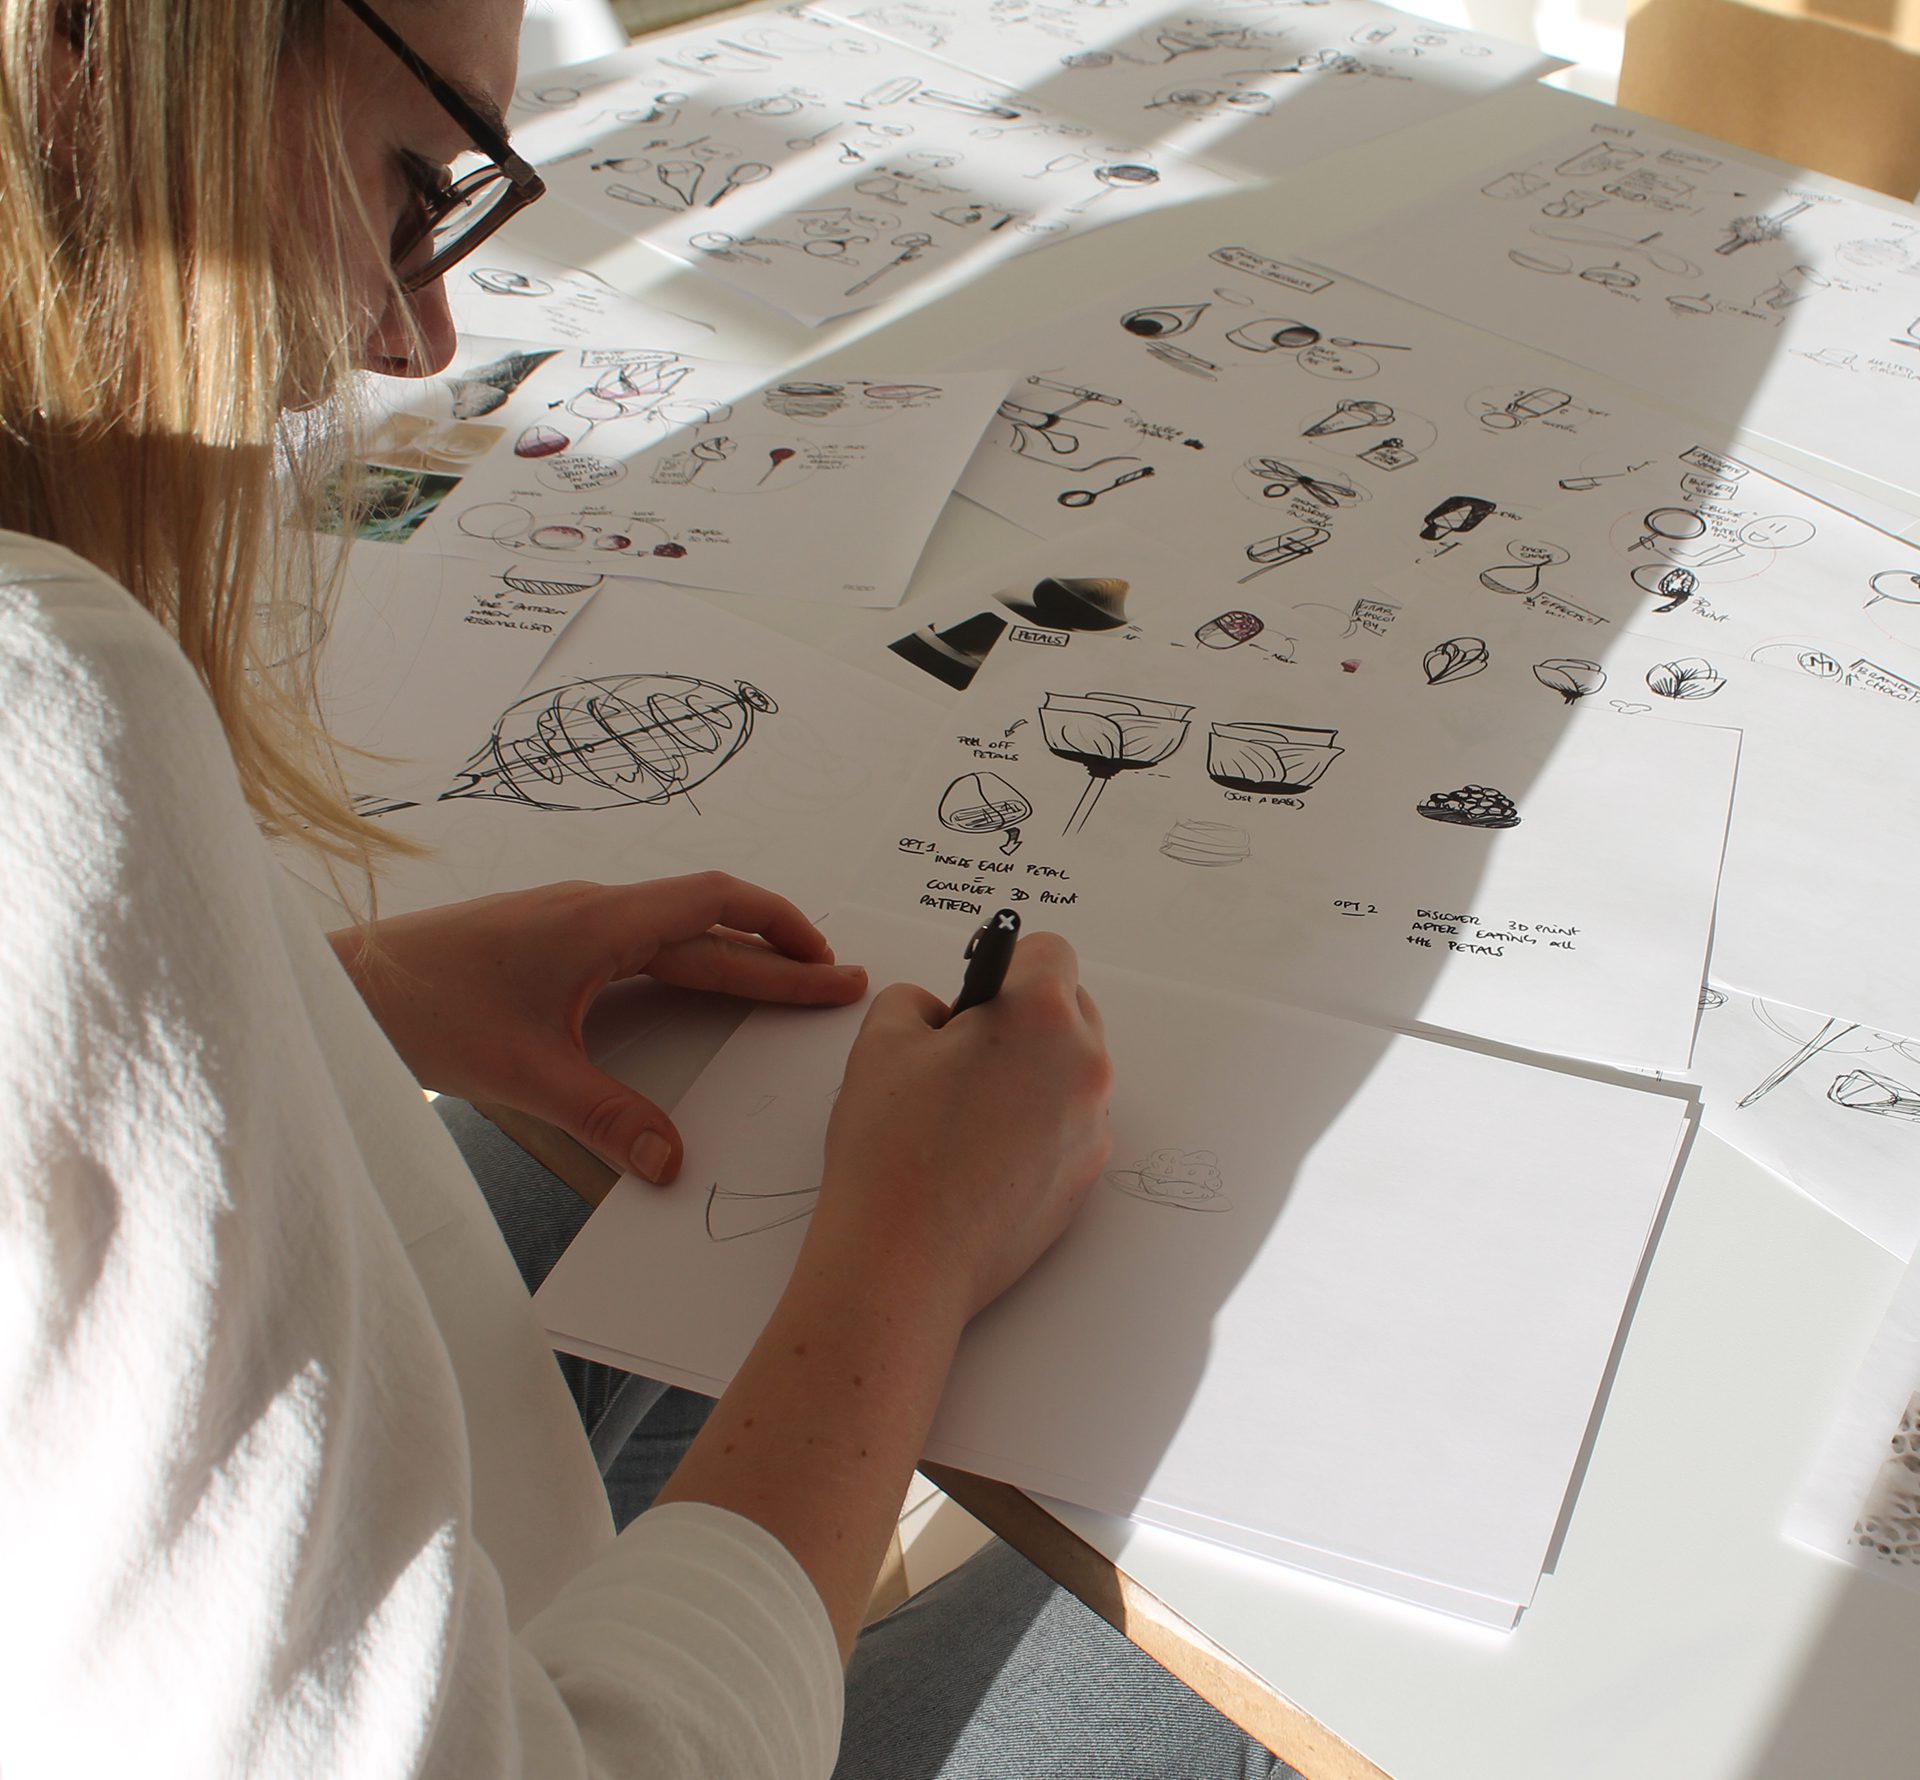 Bea, a designer at Rodd sketching concepts